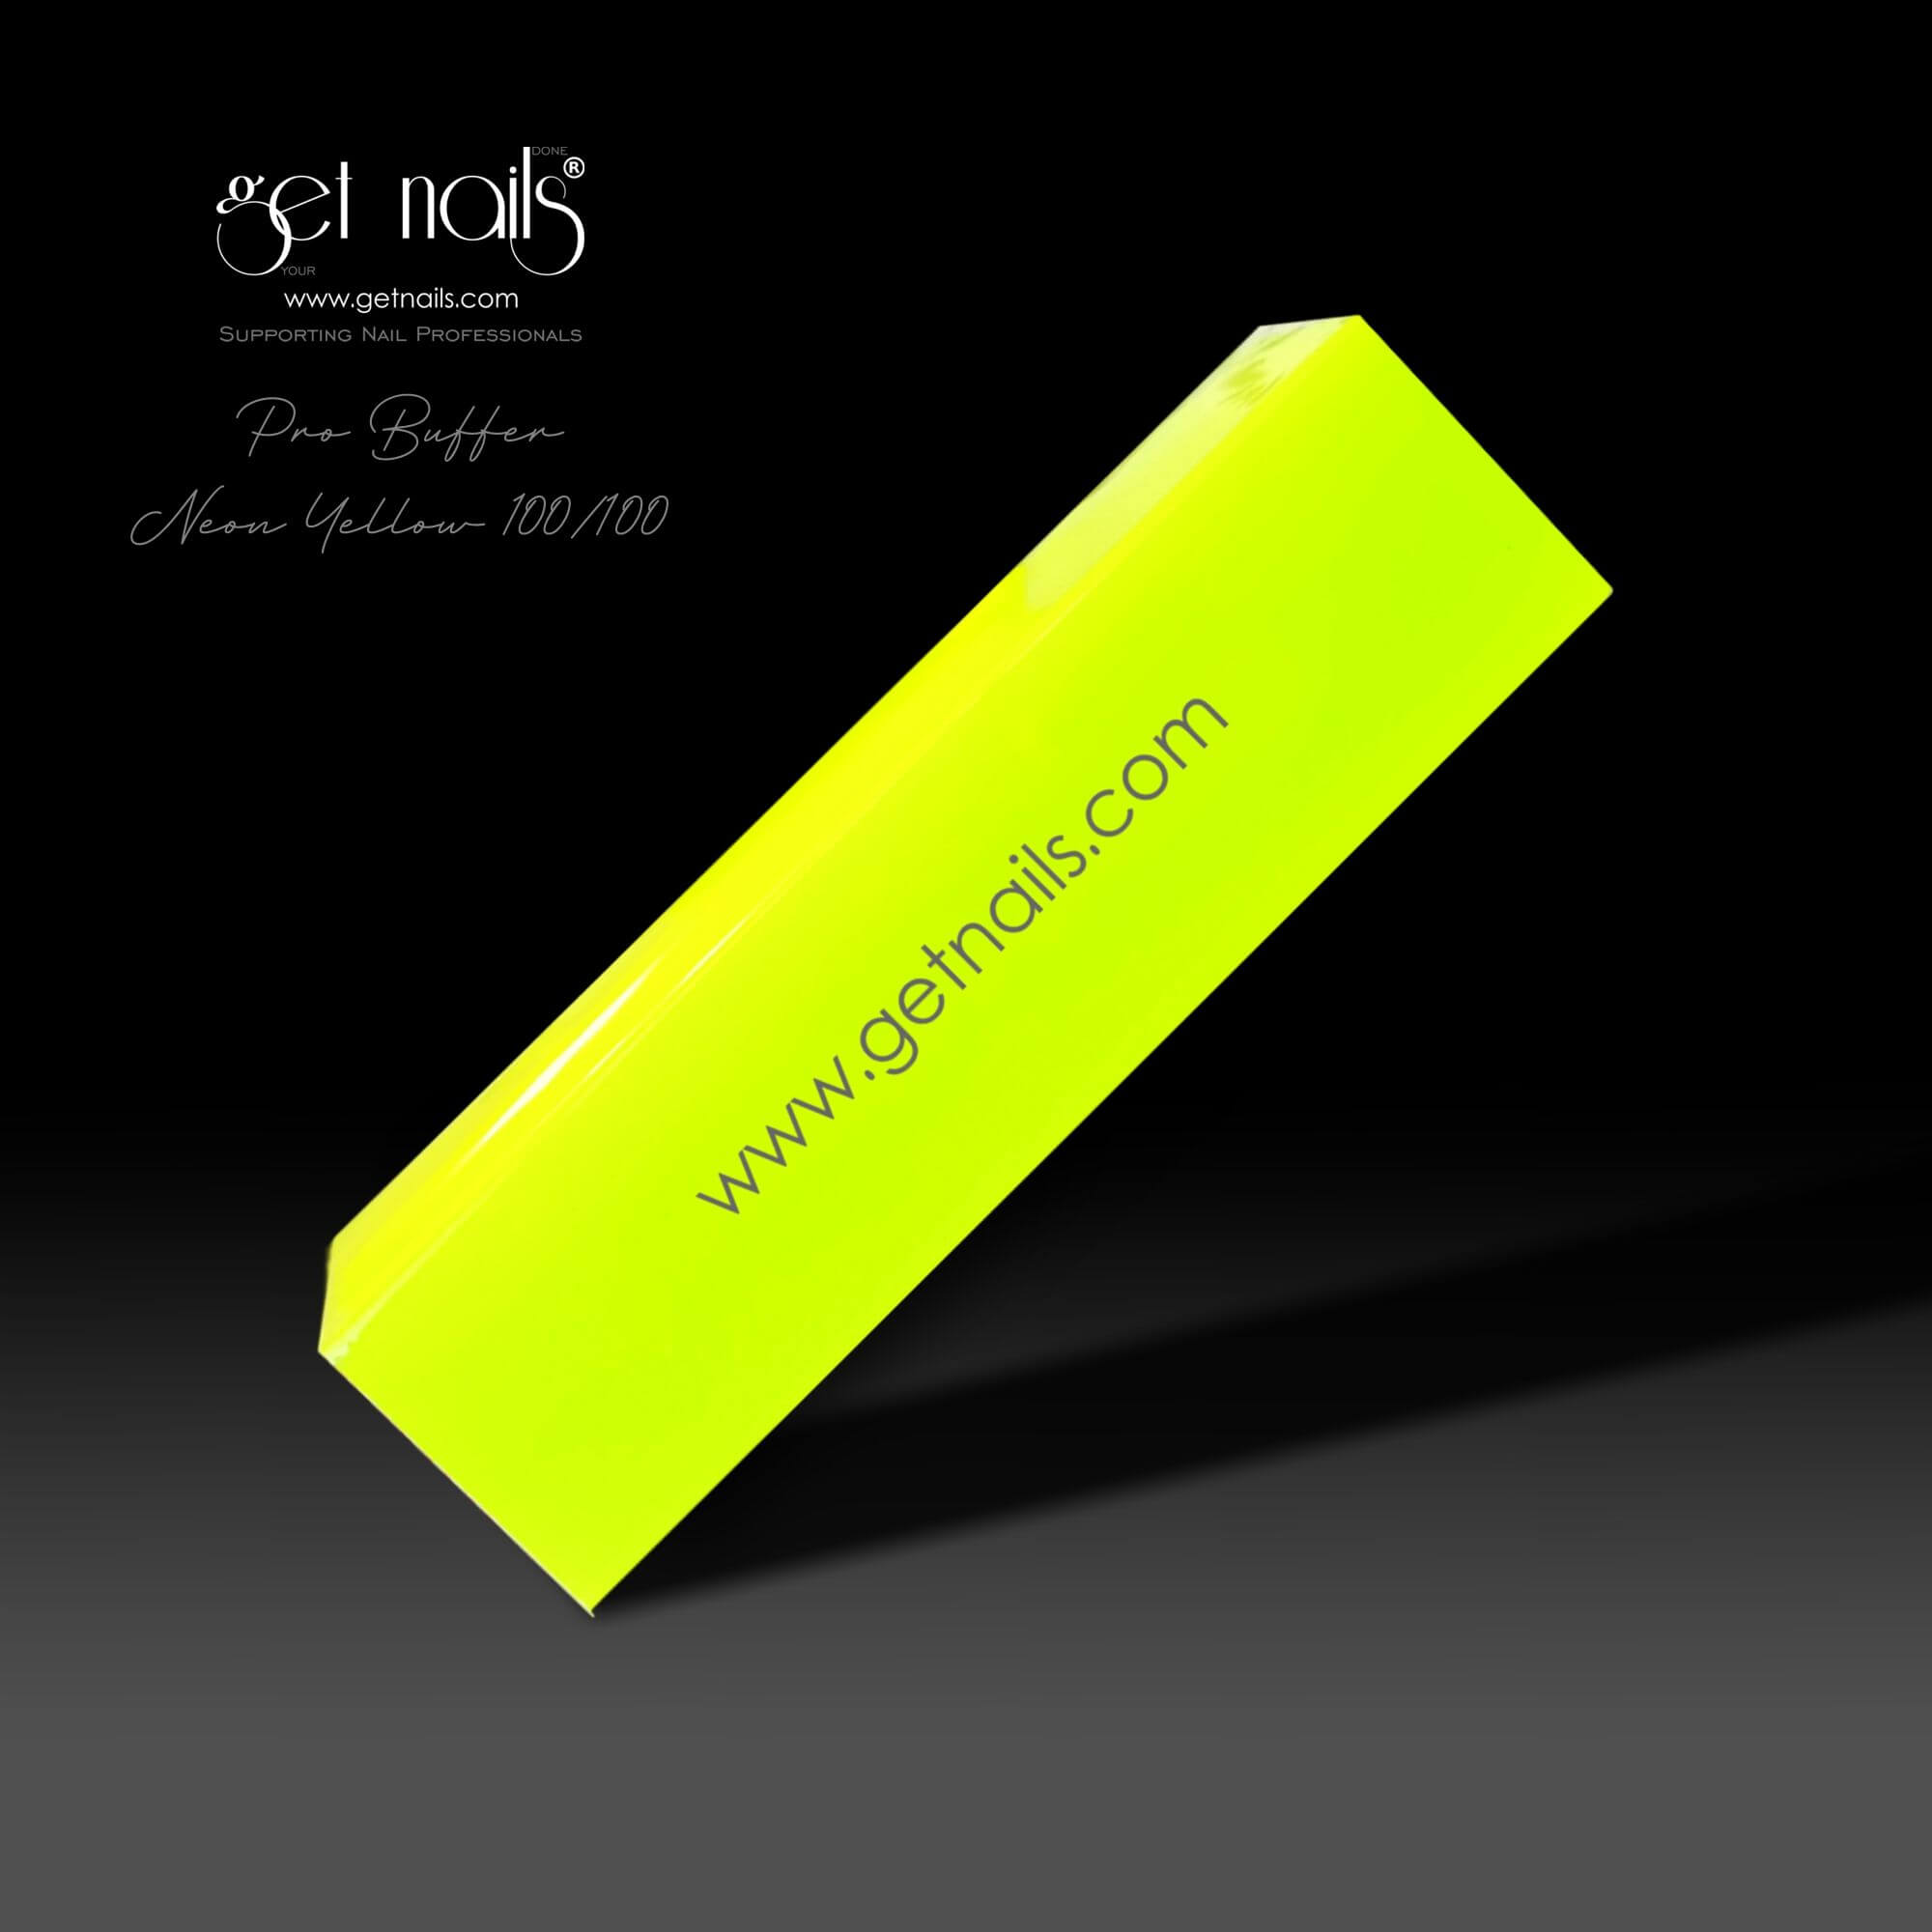 Get Nails Austria - Pro Buffer Neon Yellow 100/100